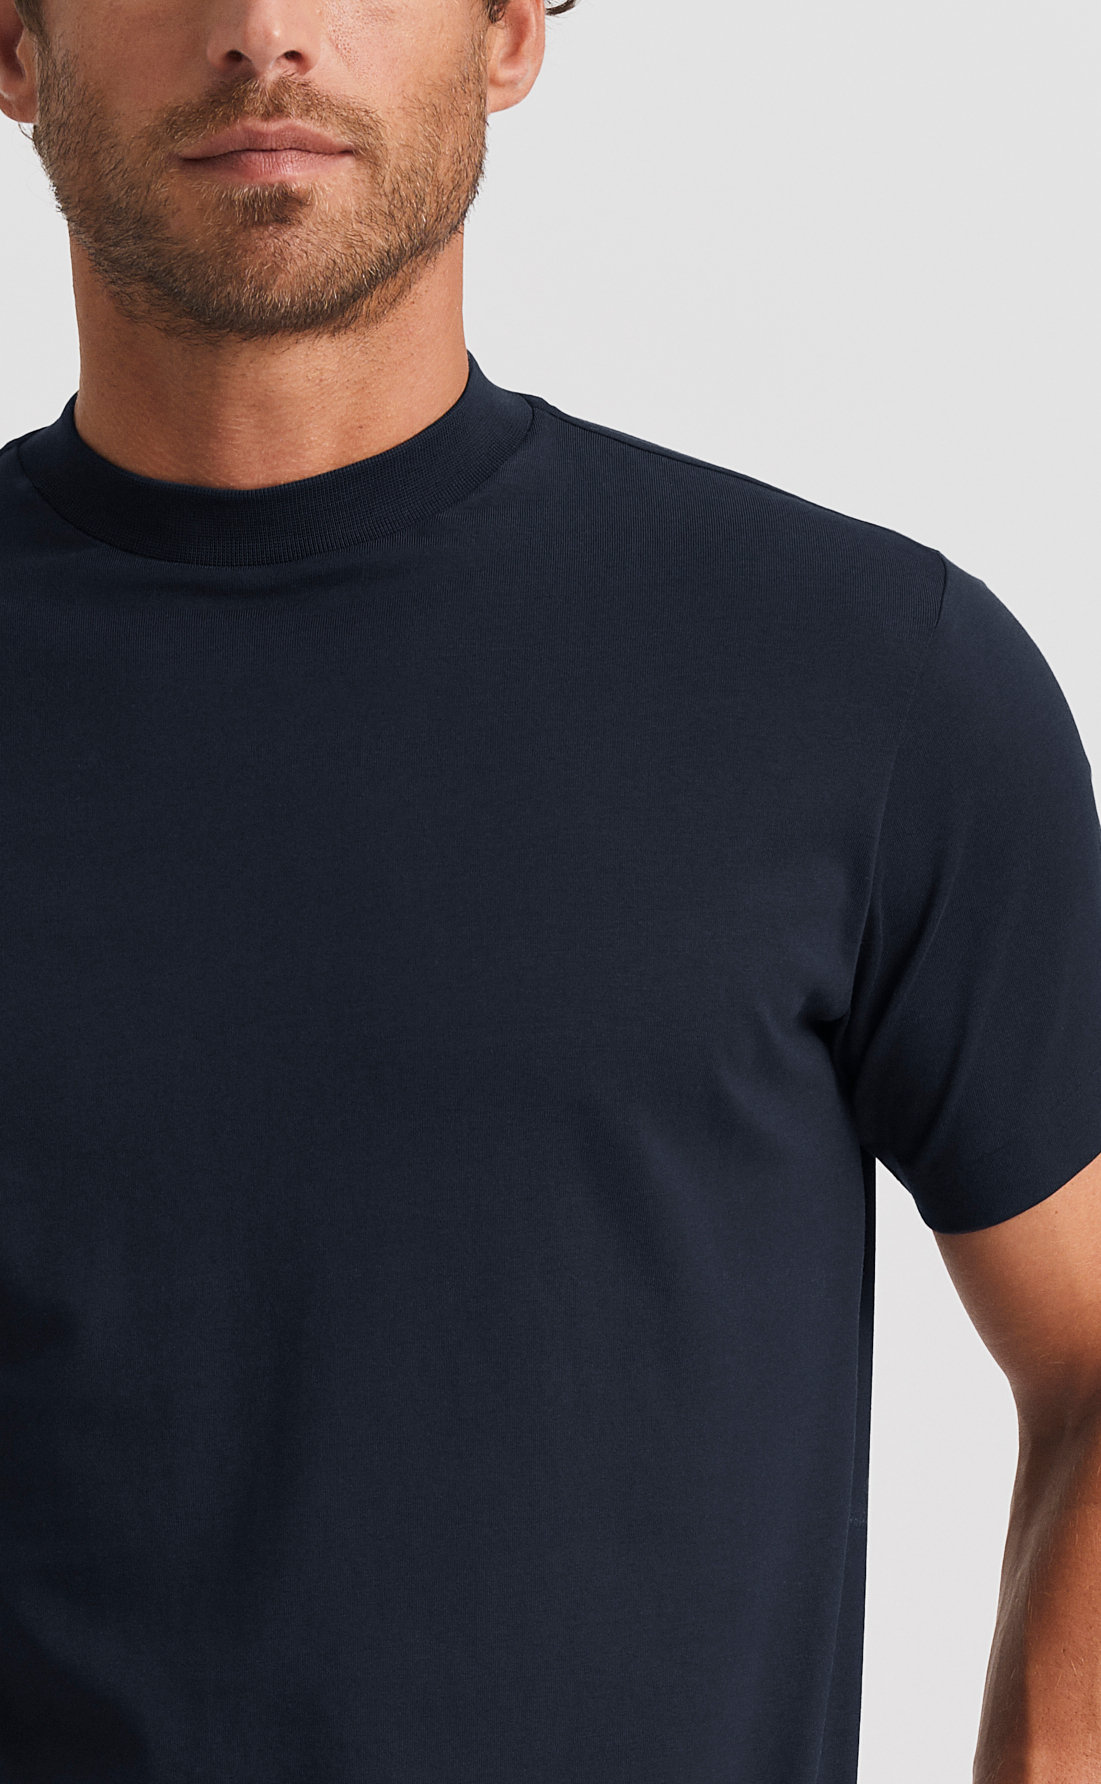 How Deep Should V Neck T-Shirts Be?